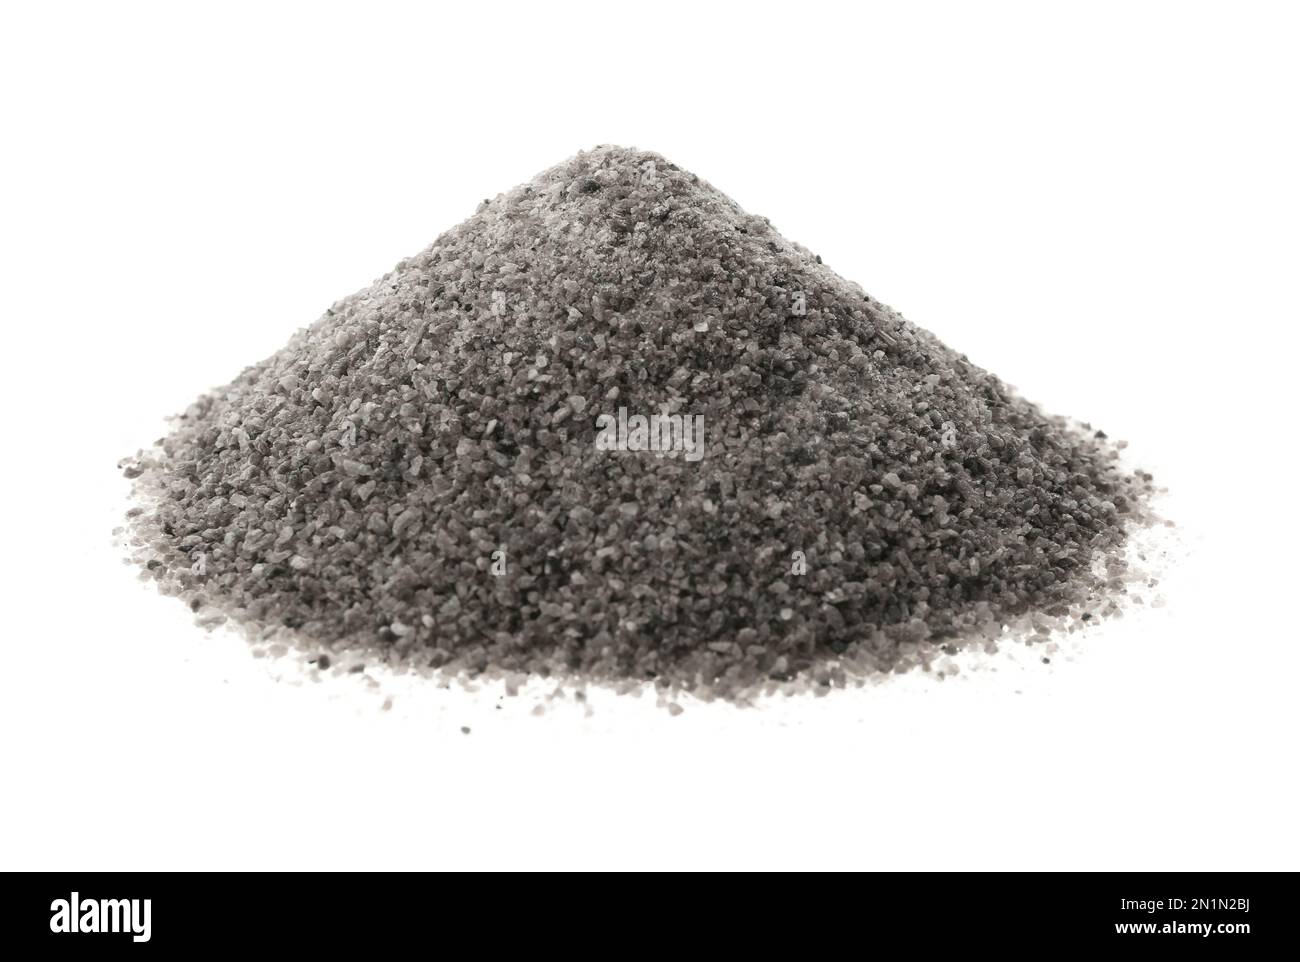 Pile of ground black salt isolated on white Stock Photo